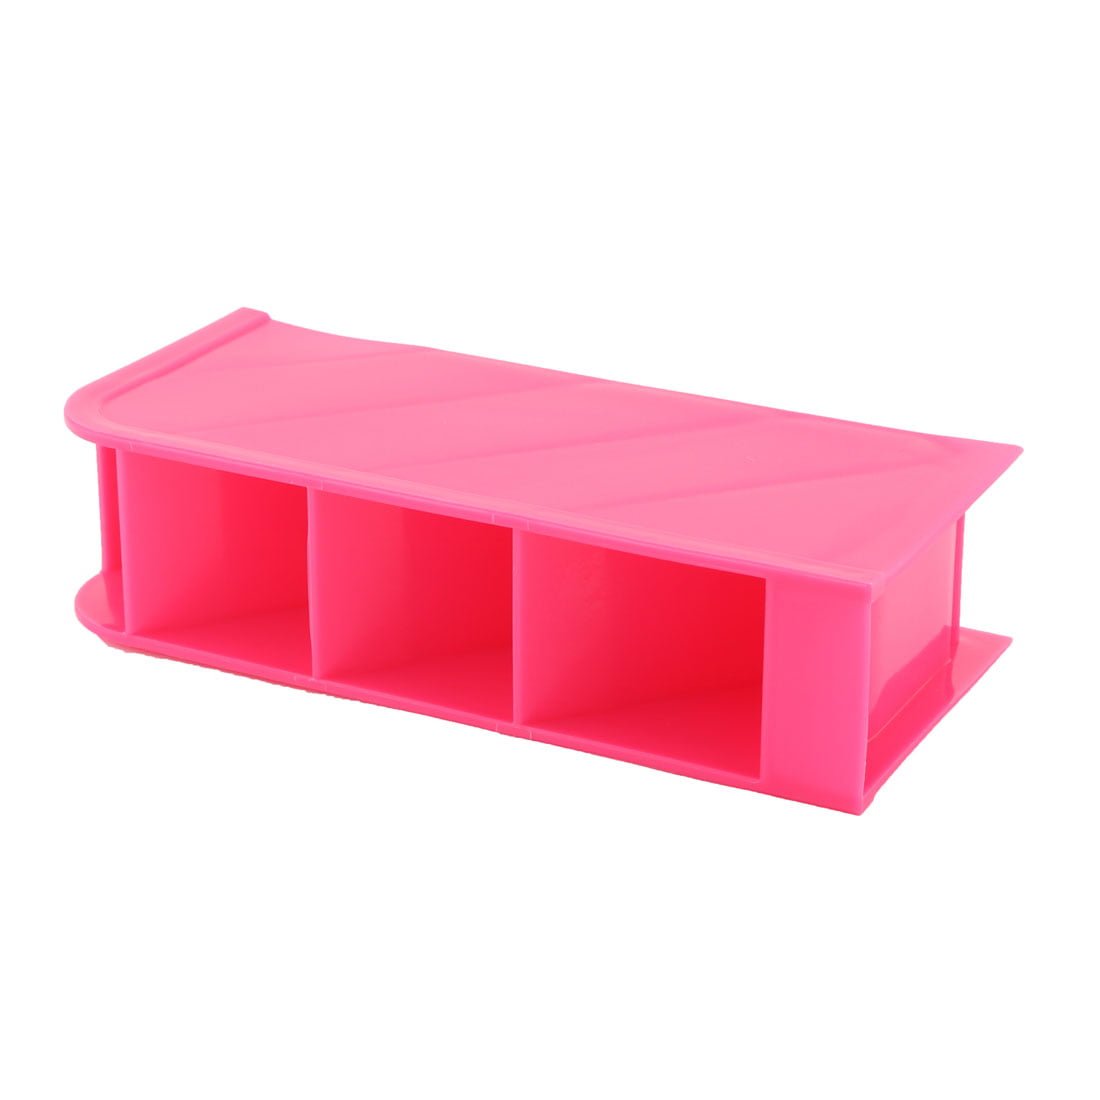 Plastic Desk Holder Organizer Storage Box 4 Slots Makeup Case Office Home